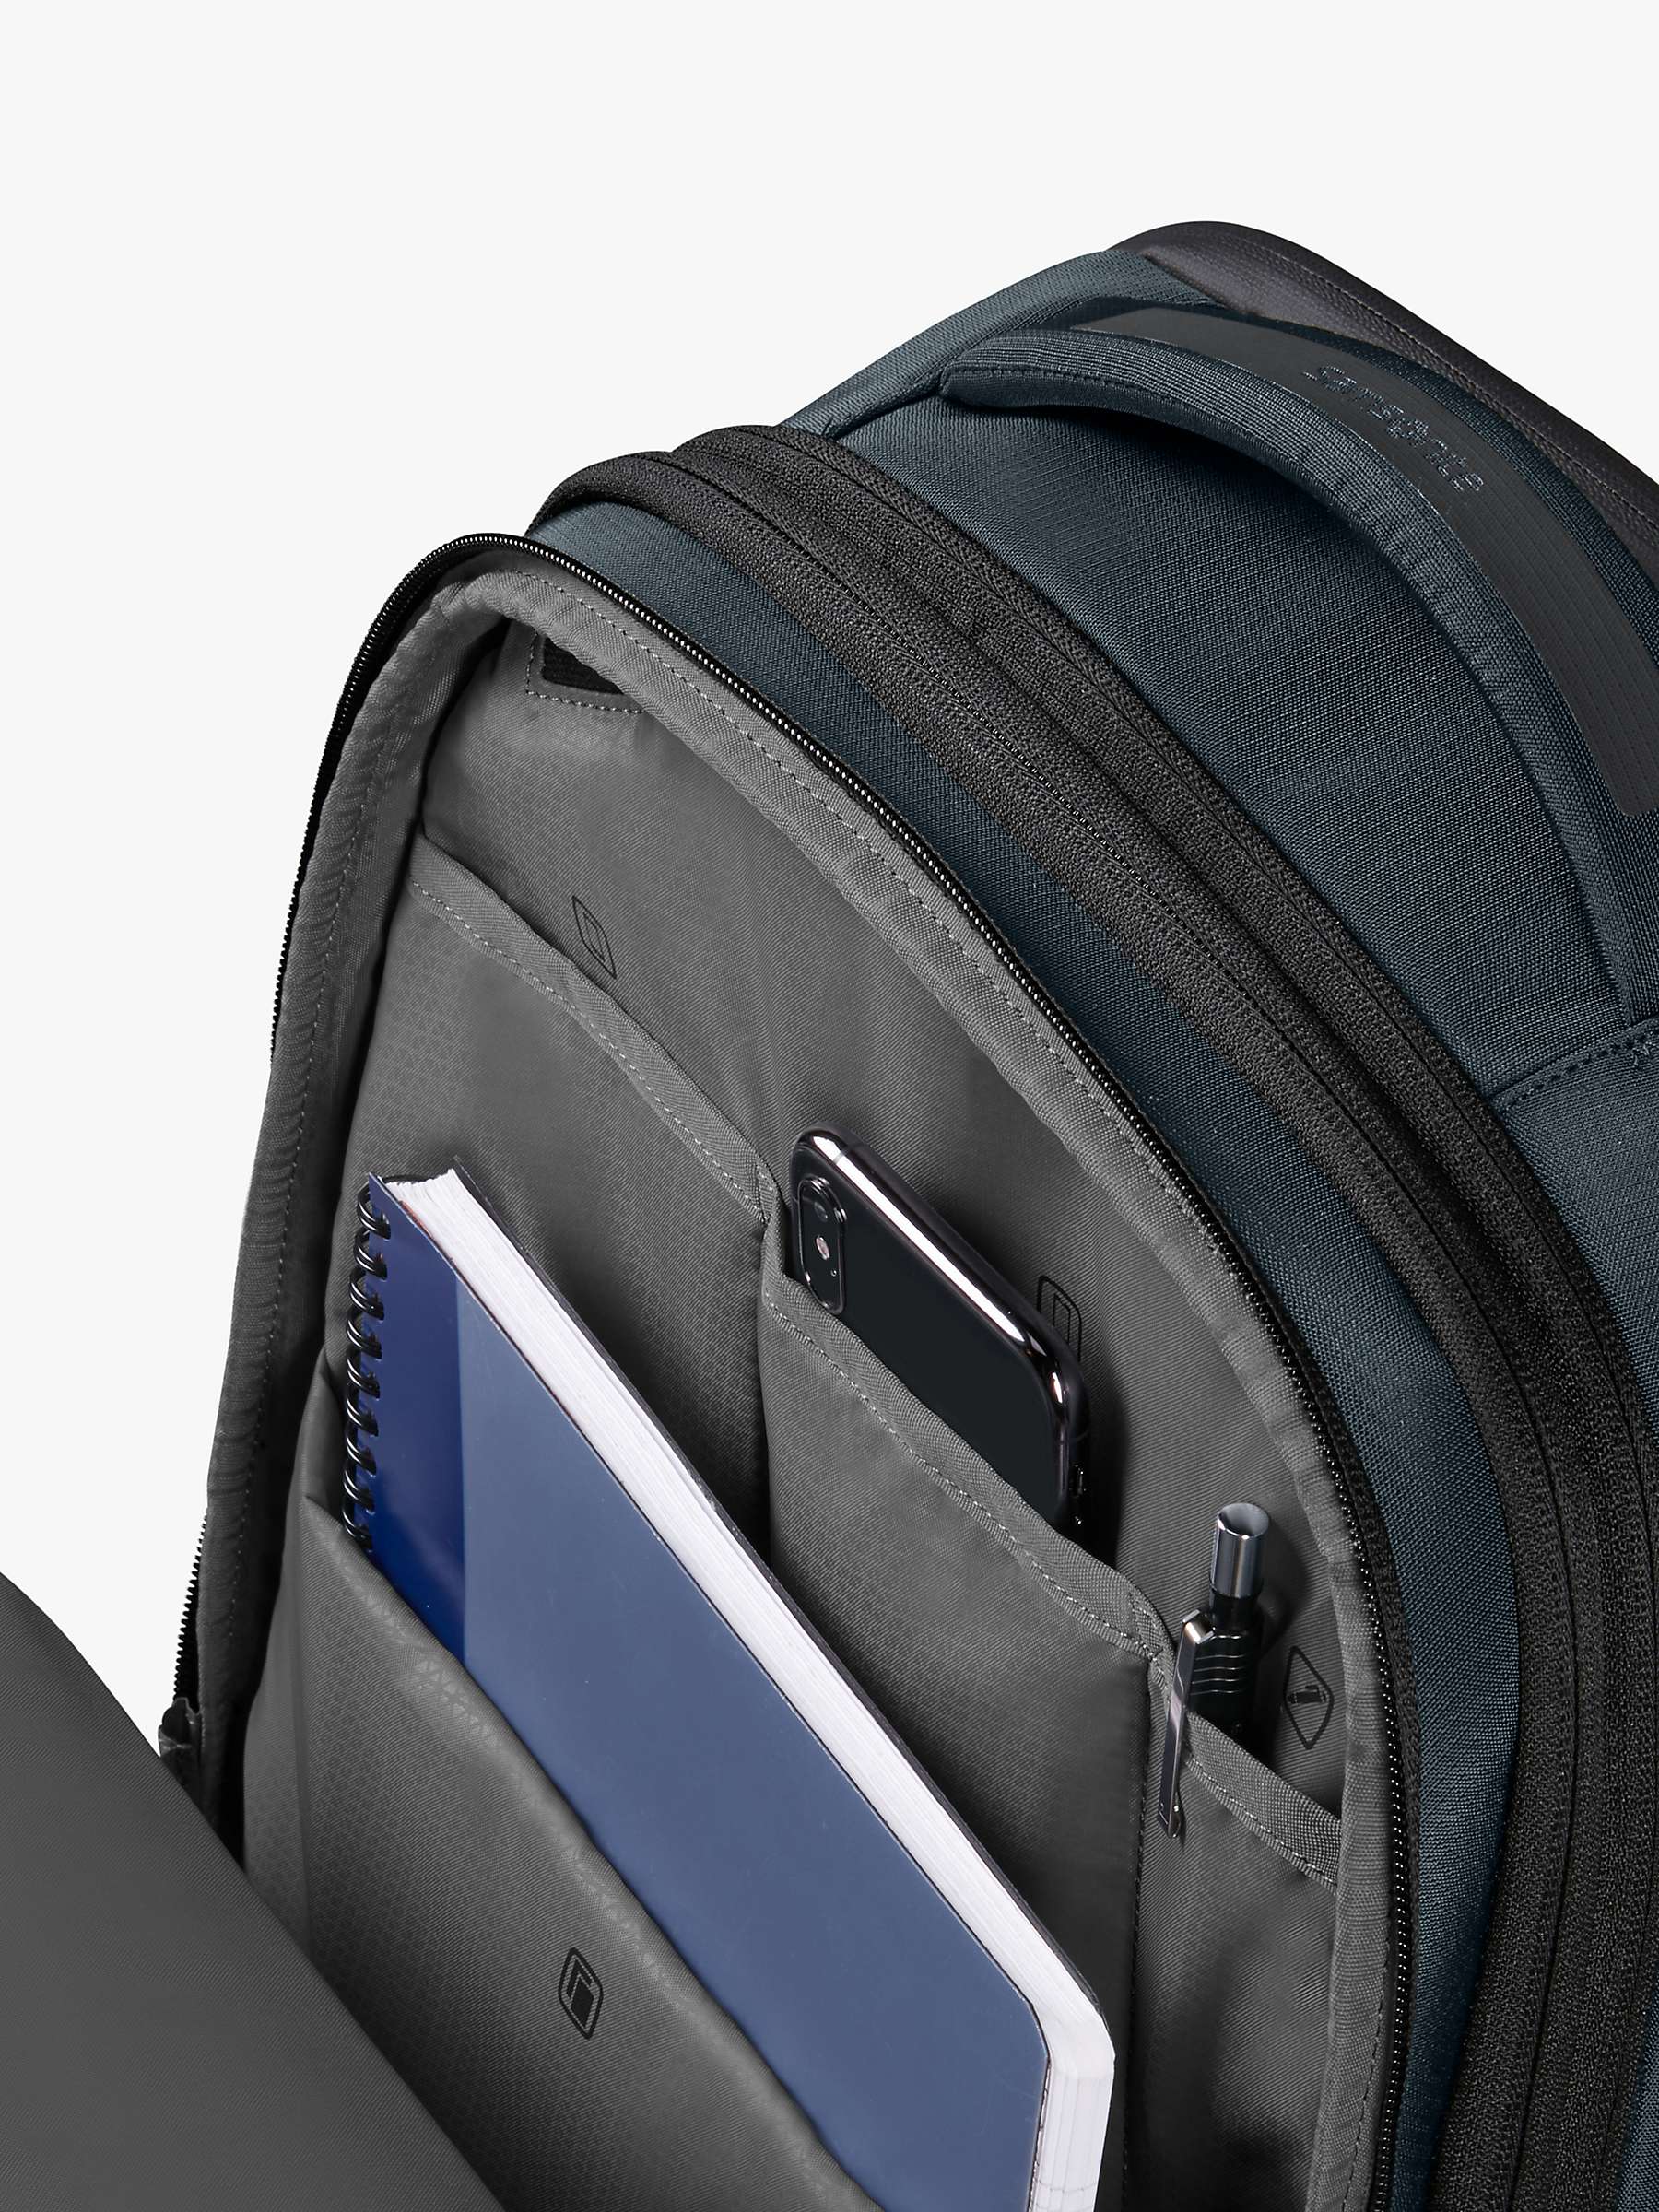 Buy Samsonite Biz2Go 17.3" Recycled Laptop Backpack Online at johnlewis.com